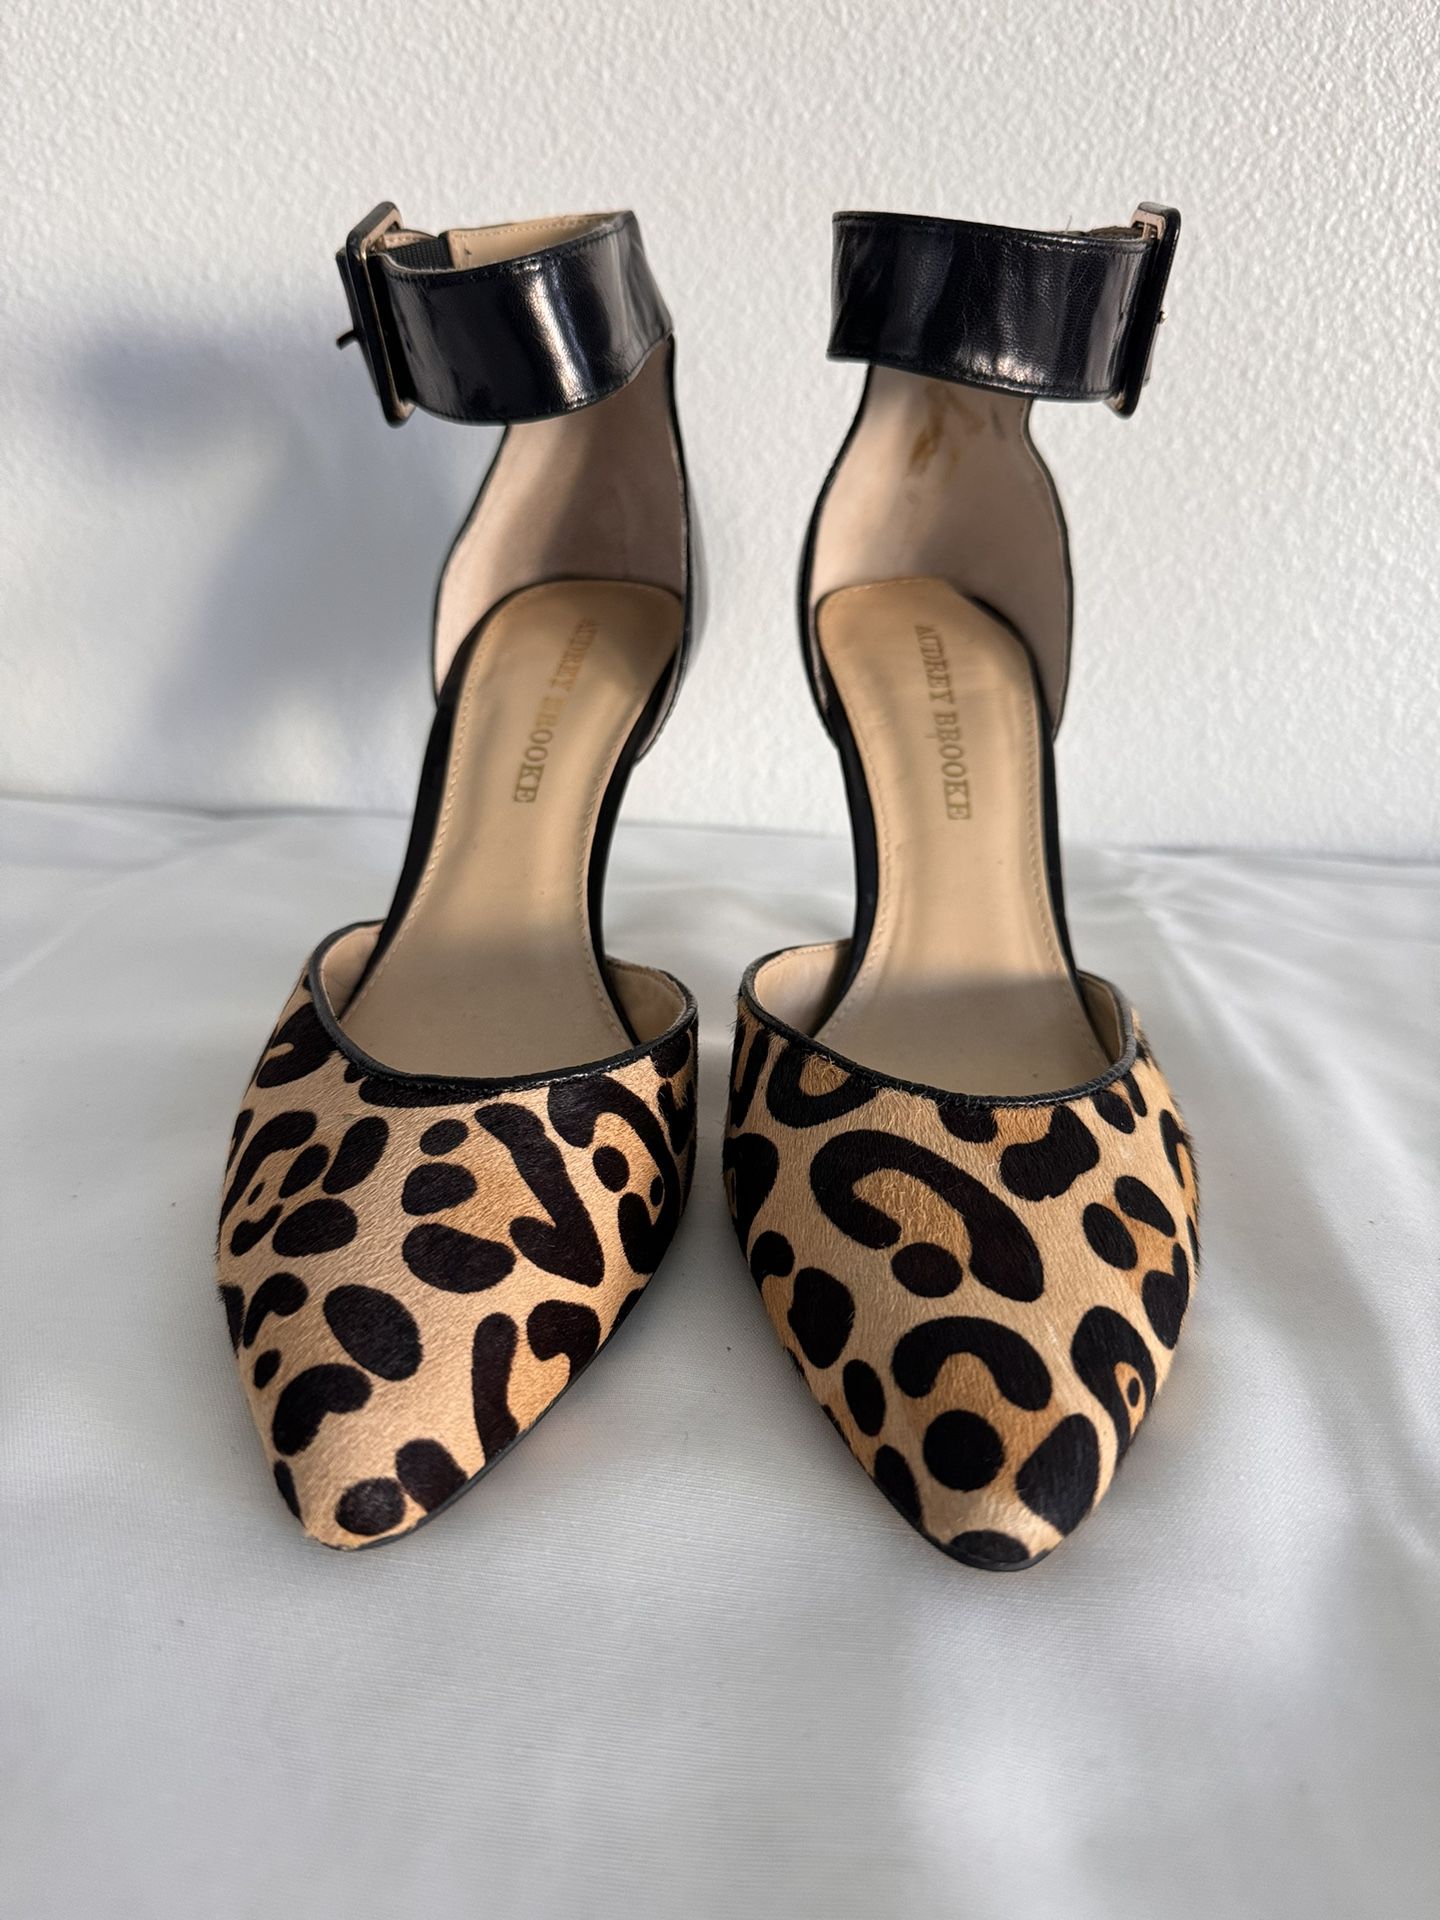 Audrey Brooke Leopard Print Heels